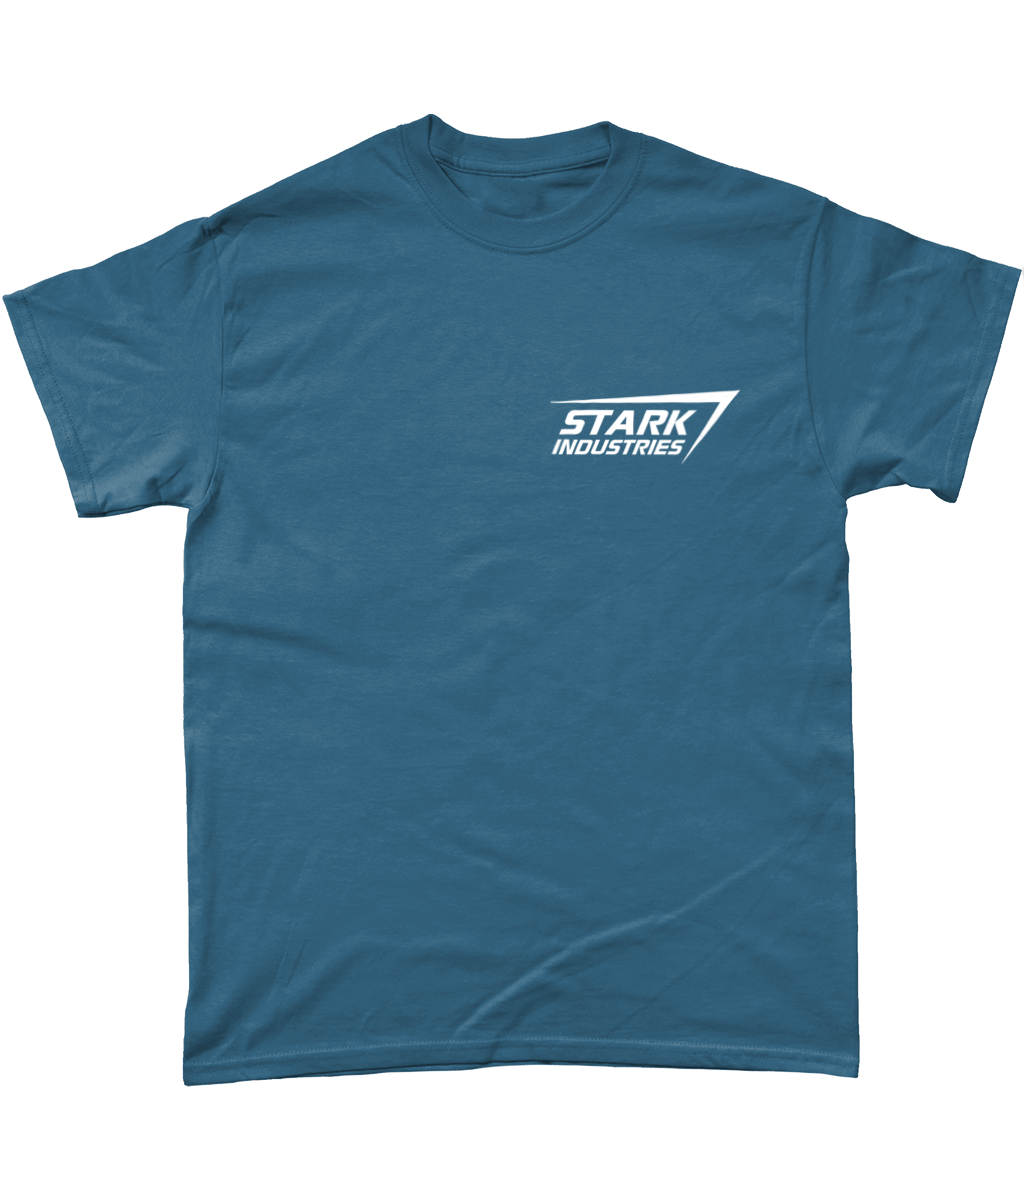 stark Industries t-shirt